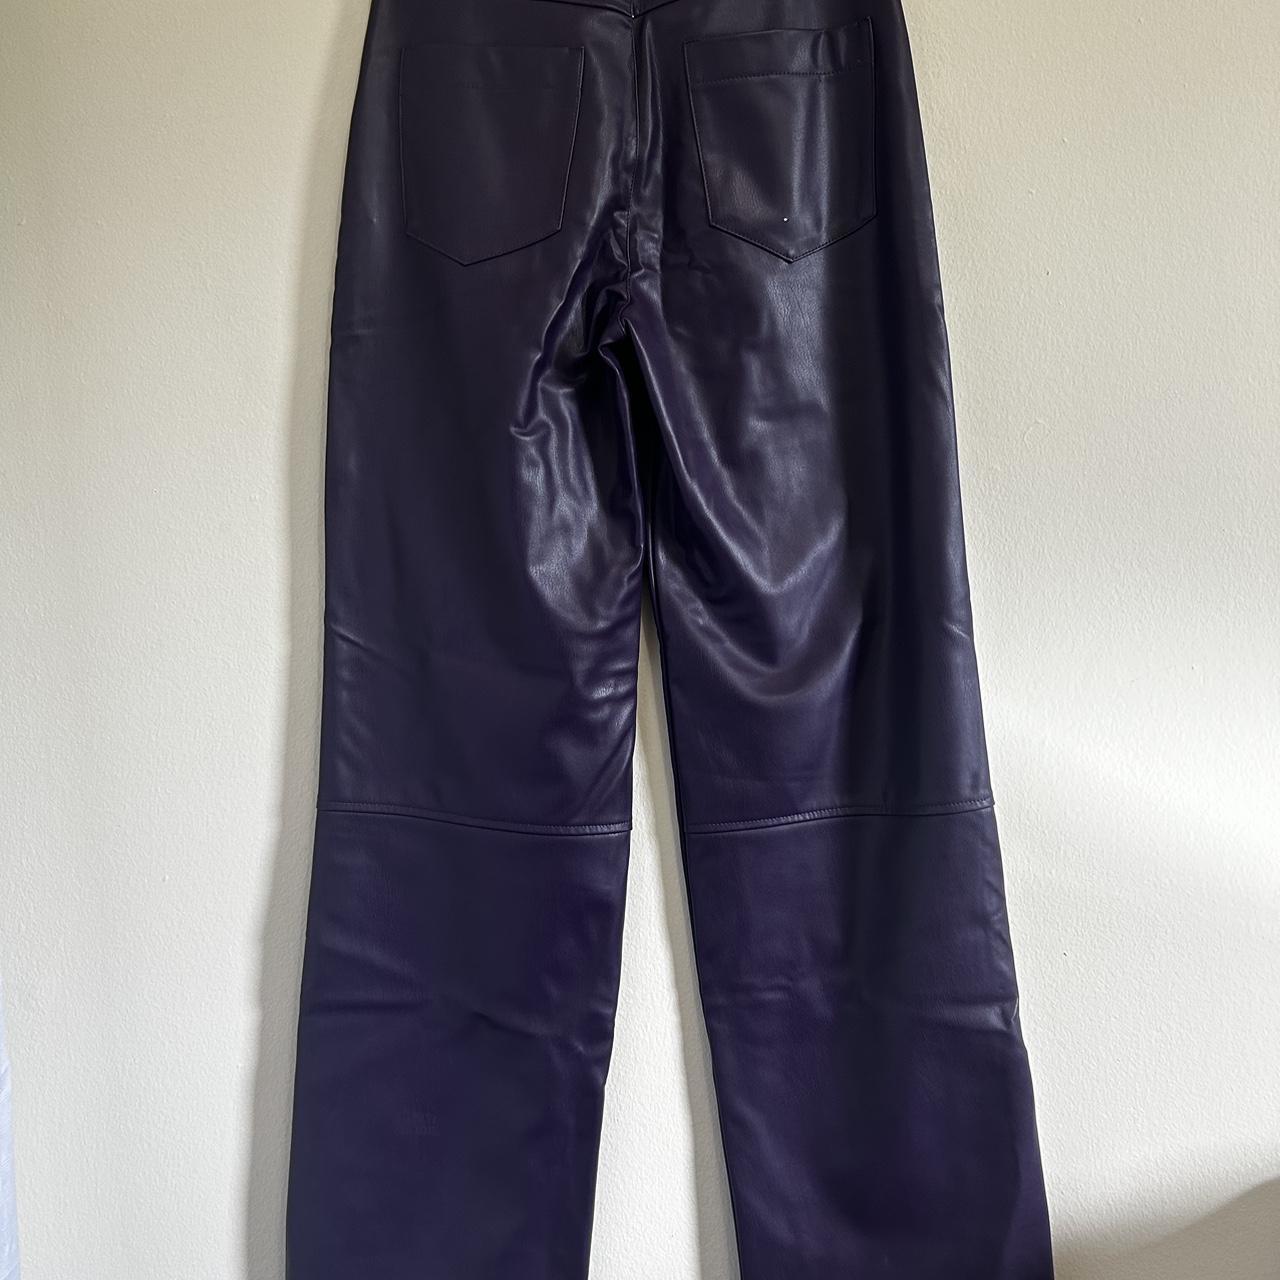 Zara dark purple leather pants. They are very high... - Depop